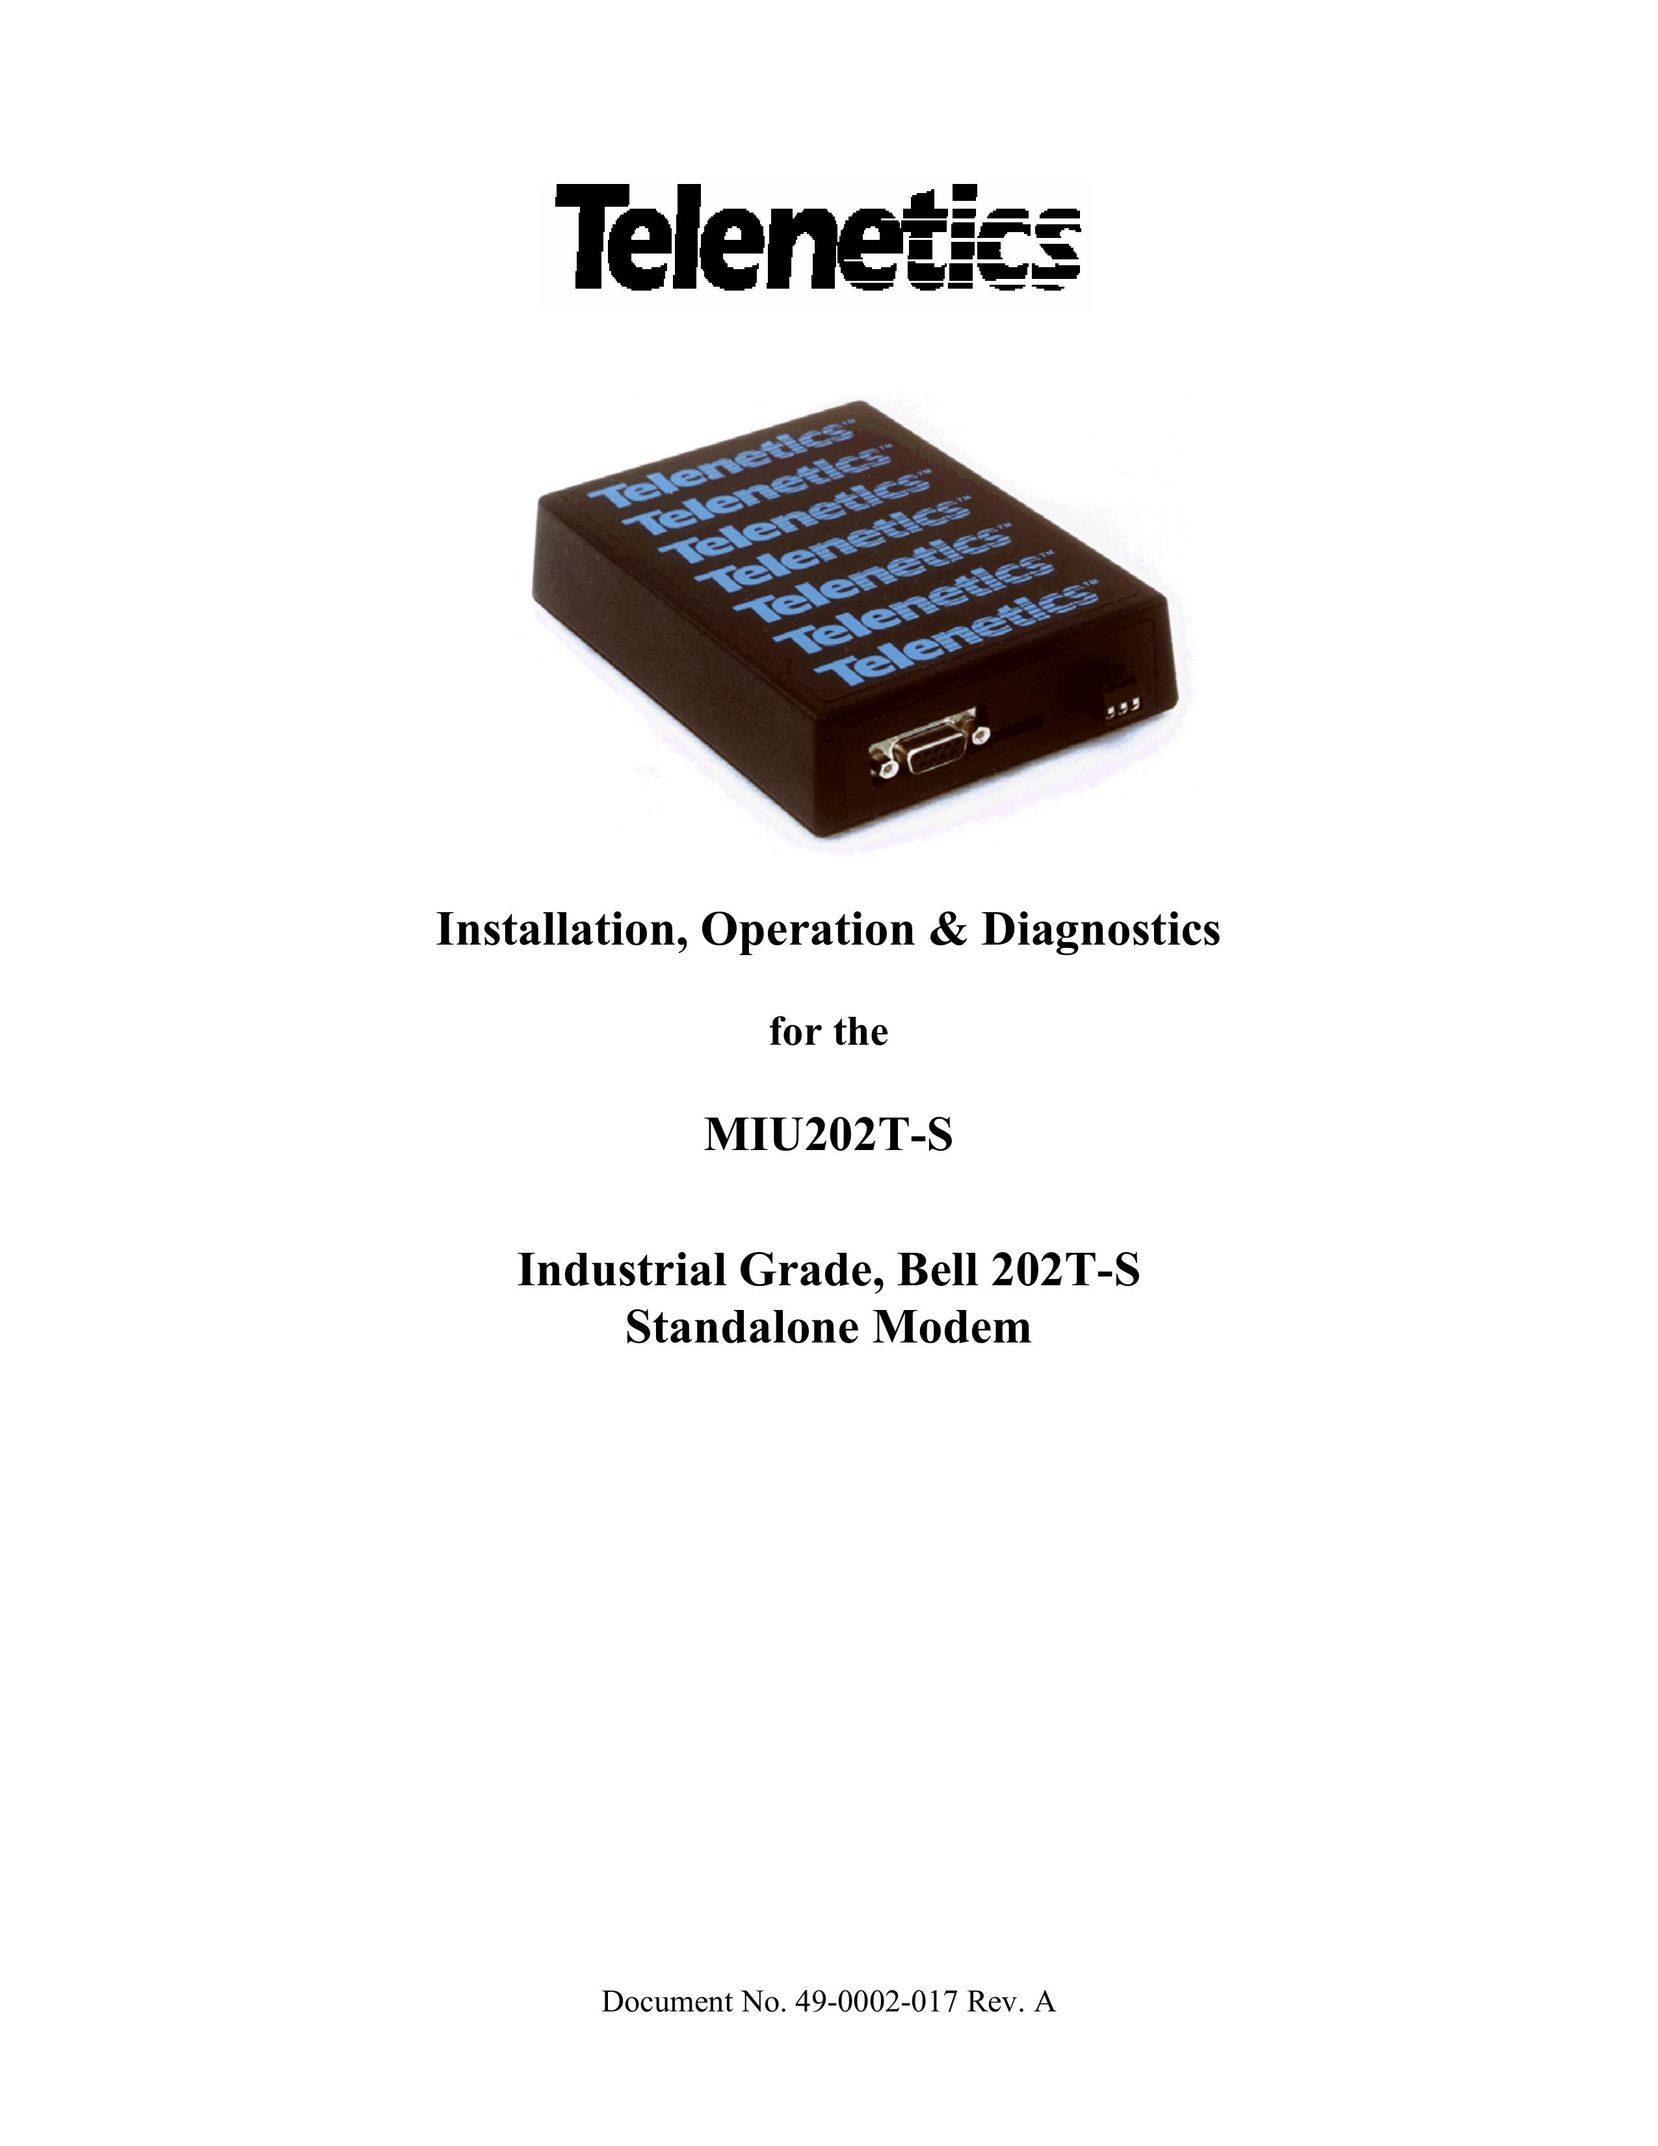 Telenetics 202T-S Network Card User Manual